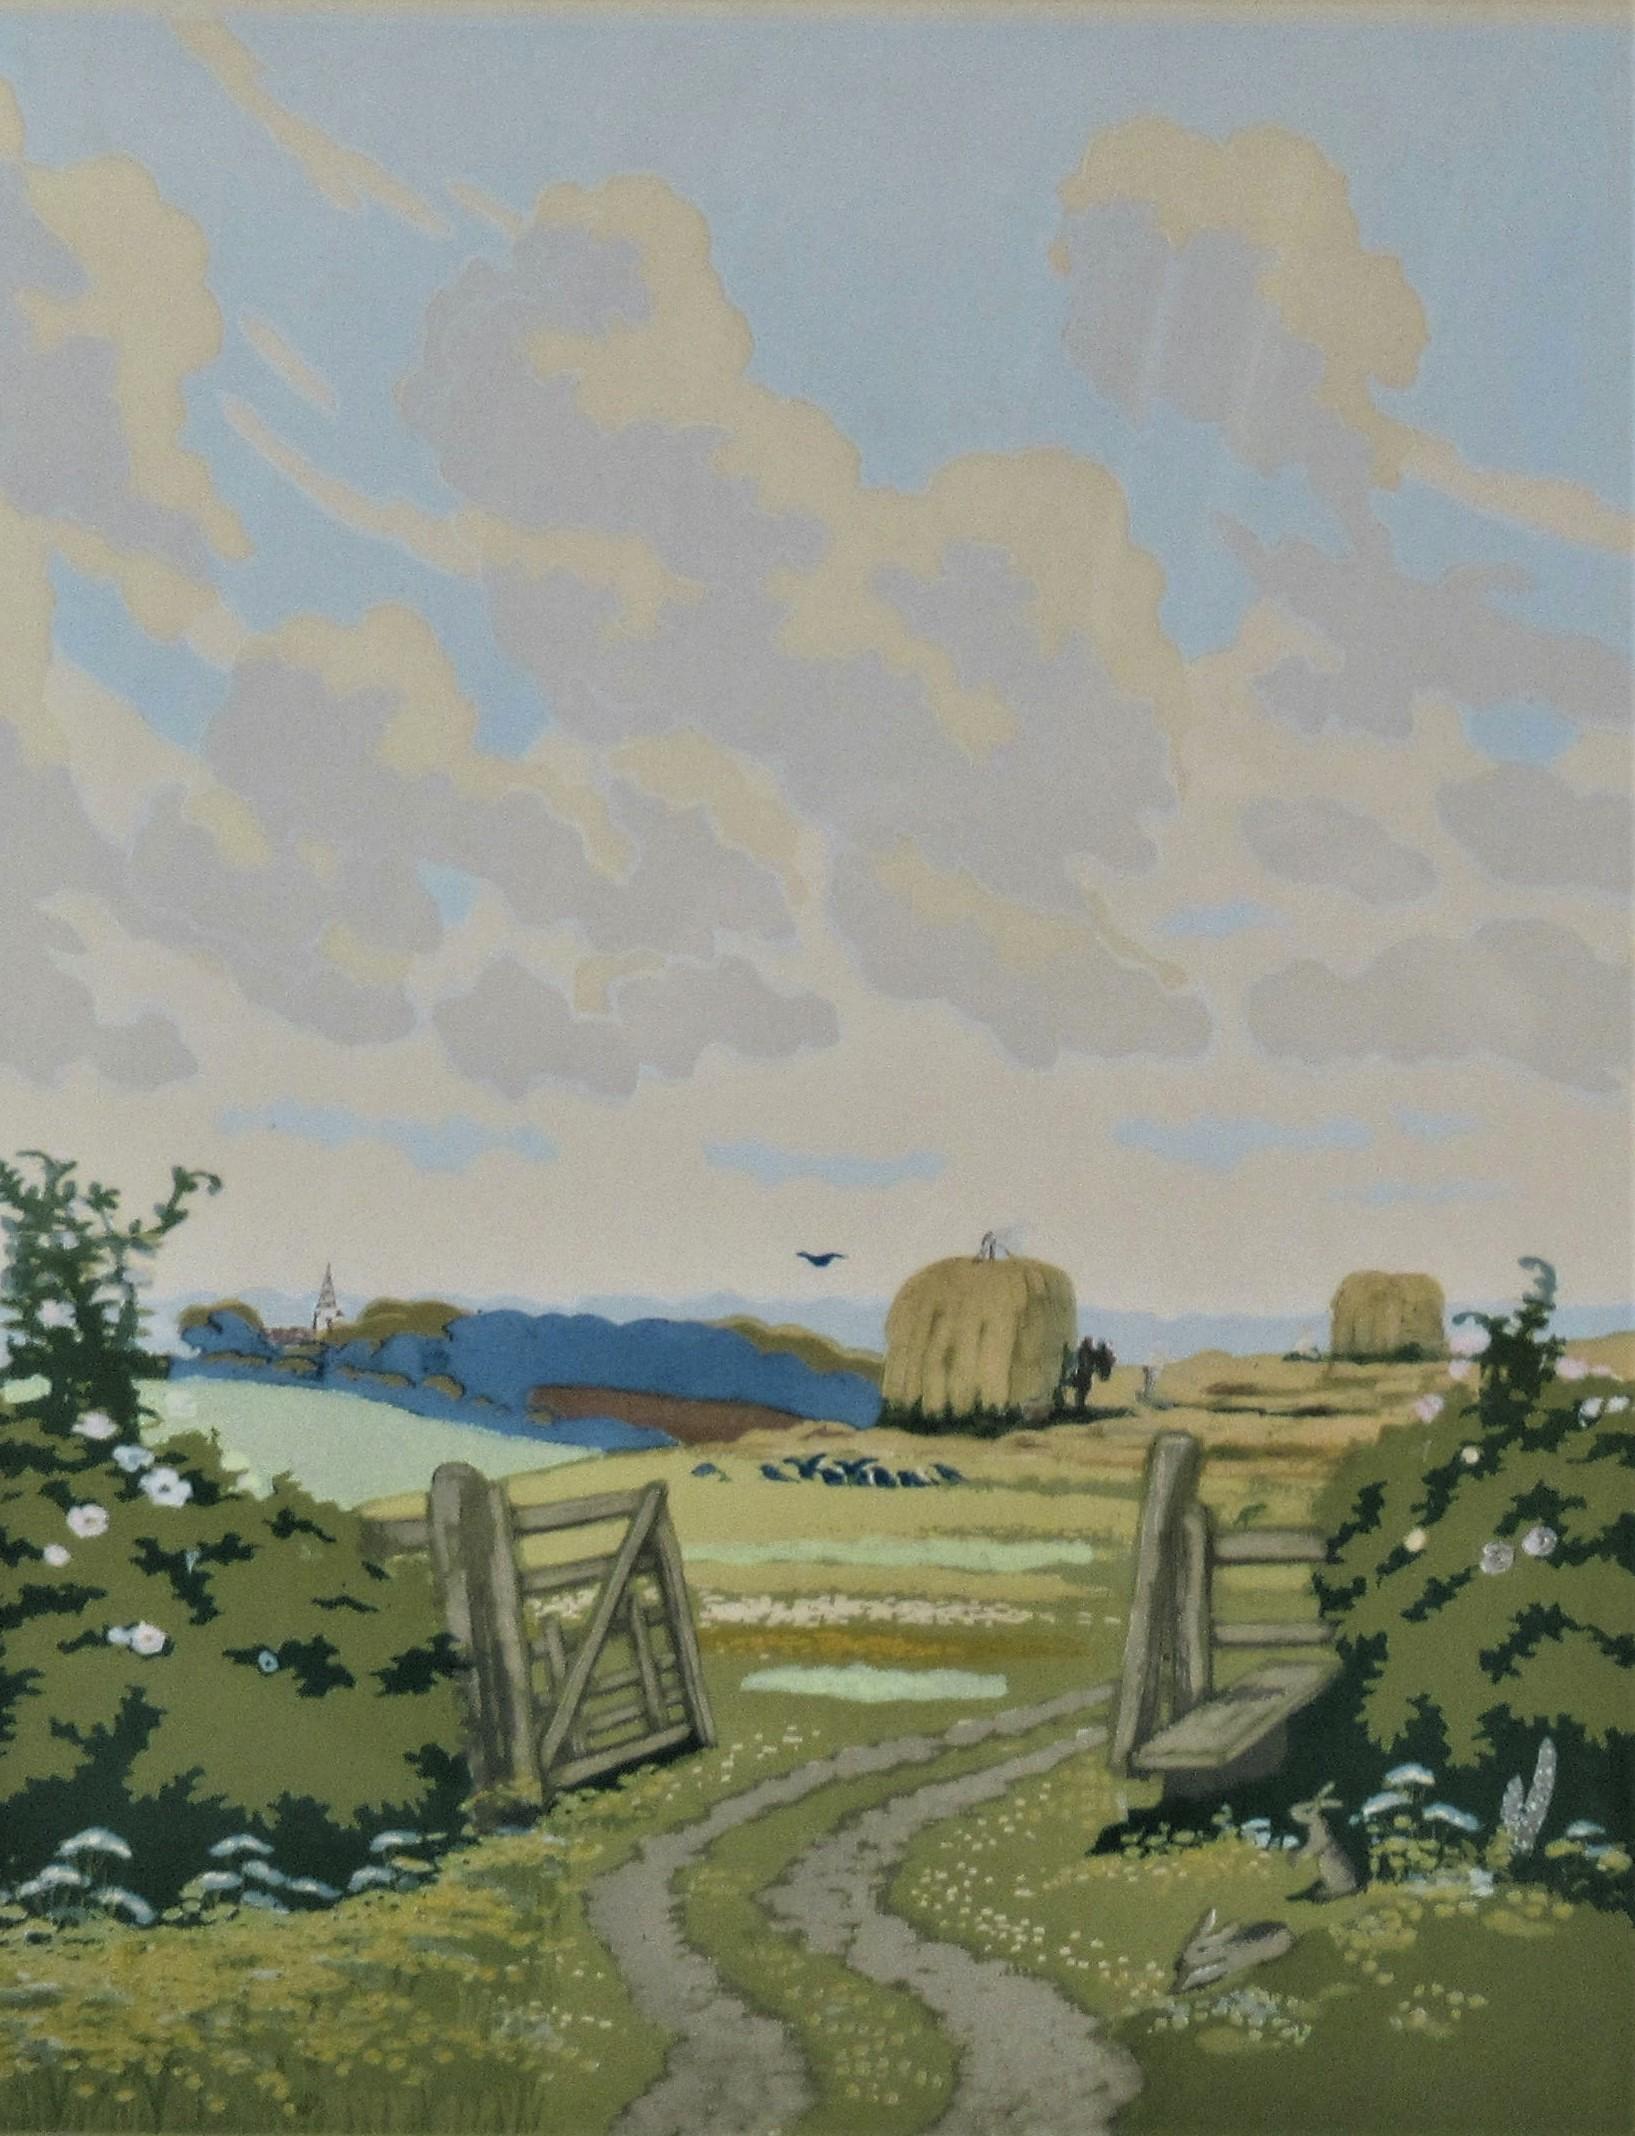 Open Gate - Print by John Hall Thorpe